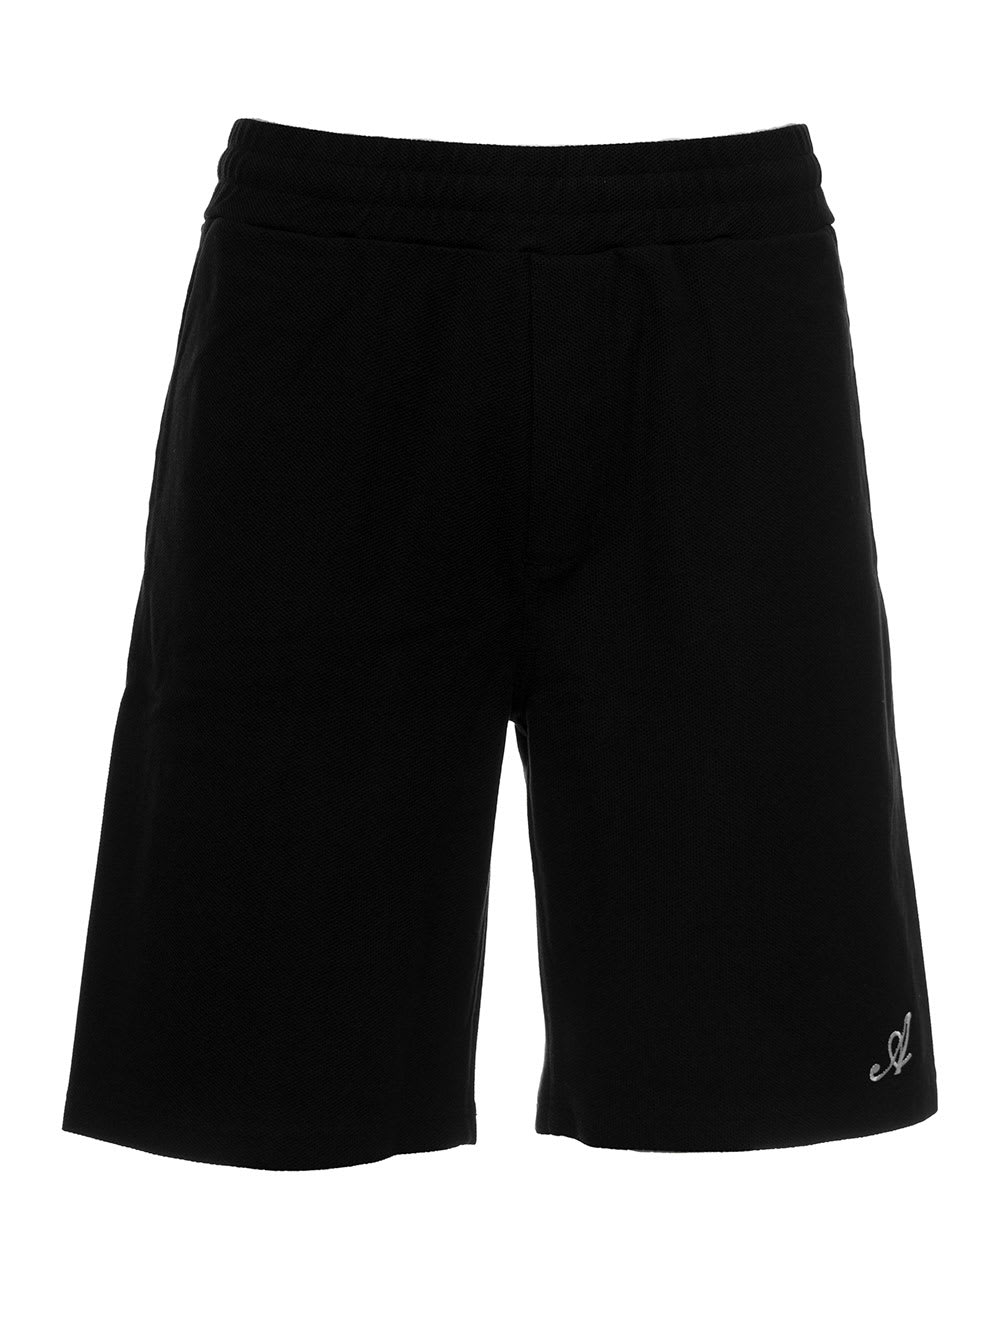 Axel Arigato Mens Black Organic Cotton Bermuda Shorts